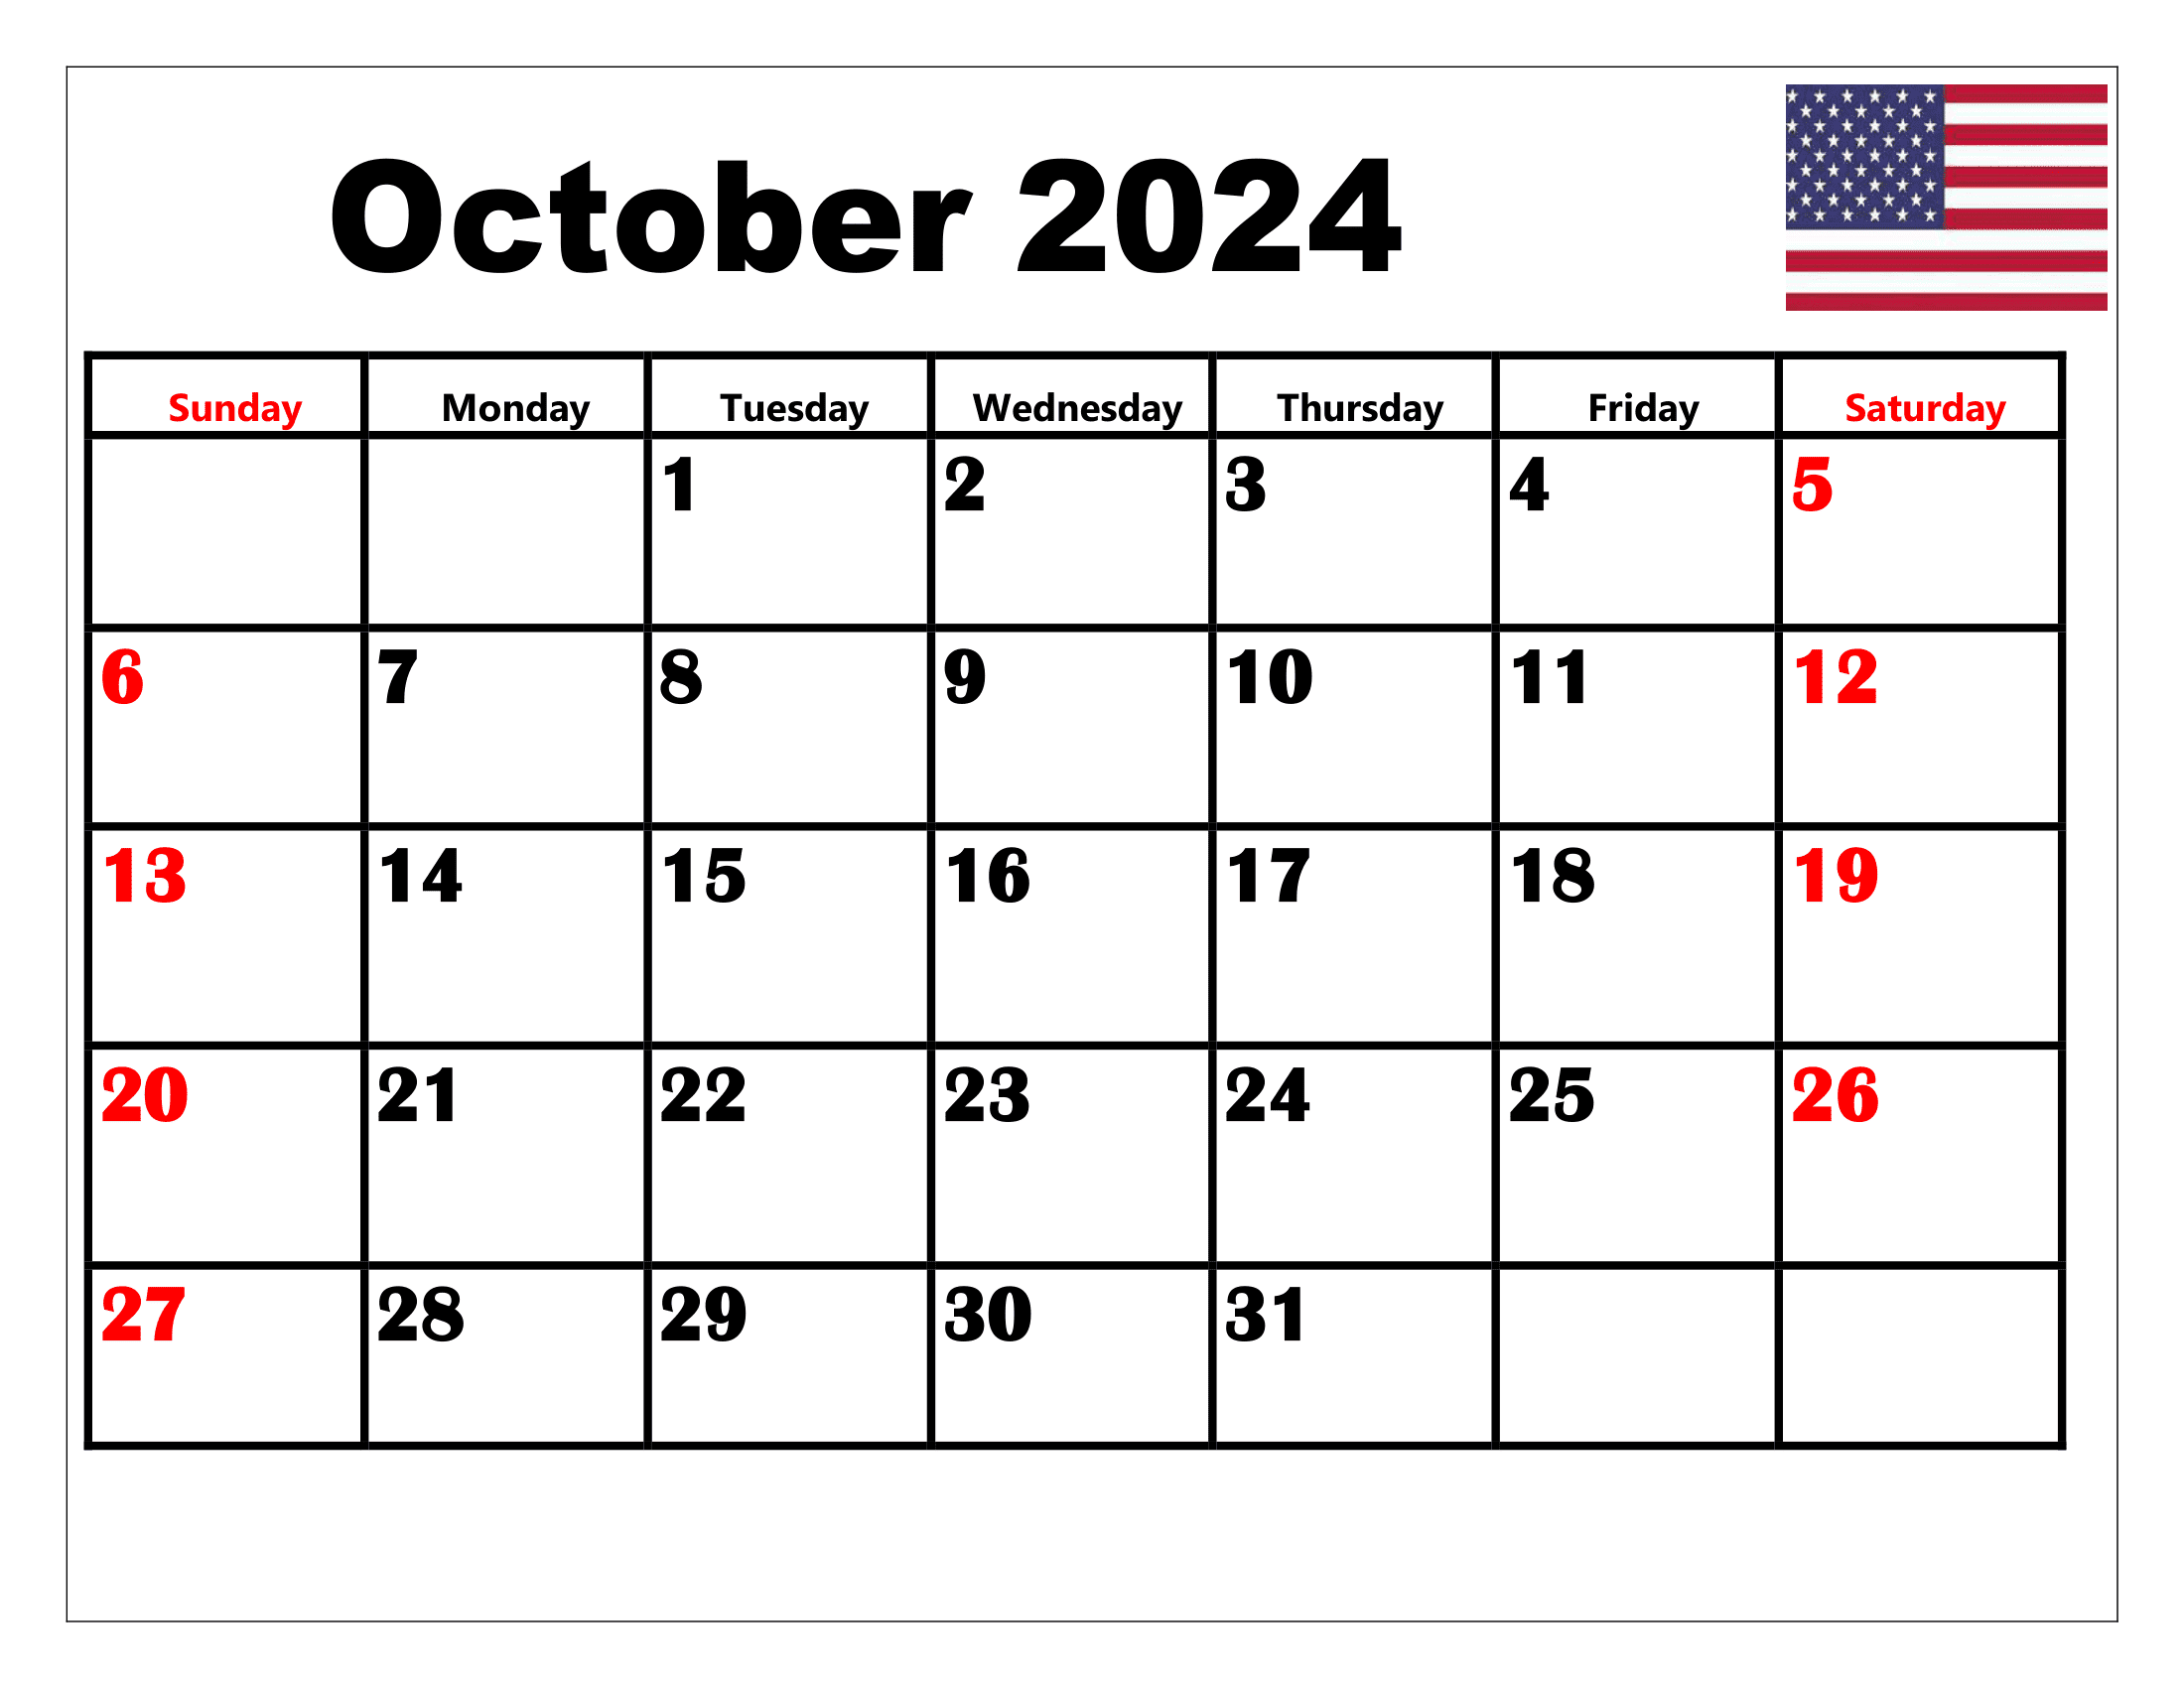 October 2024 Calendar Printable Pdf Free Templates With Holidays for Free Printable October 2024 Calendar With Holidays